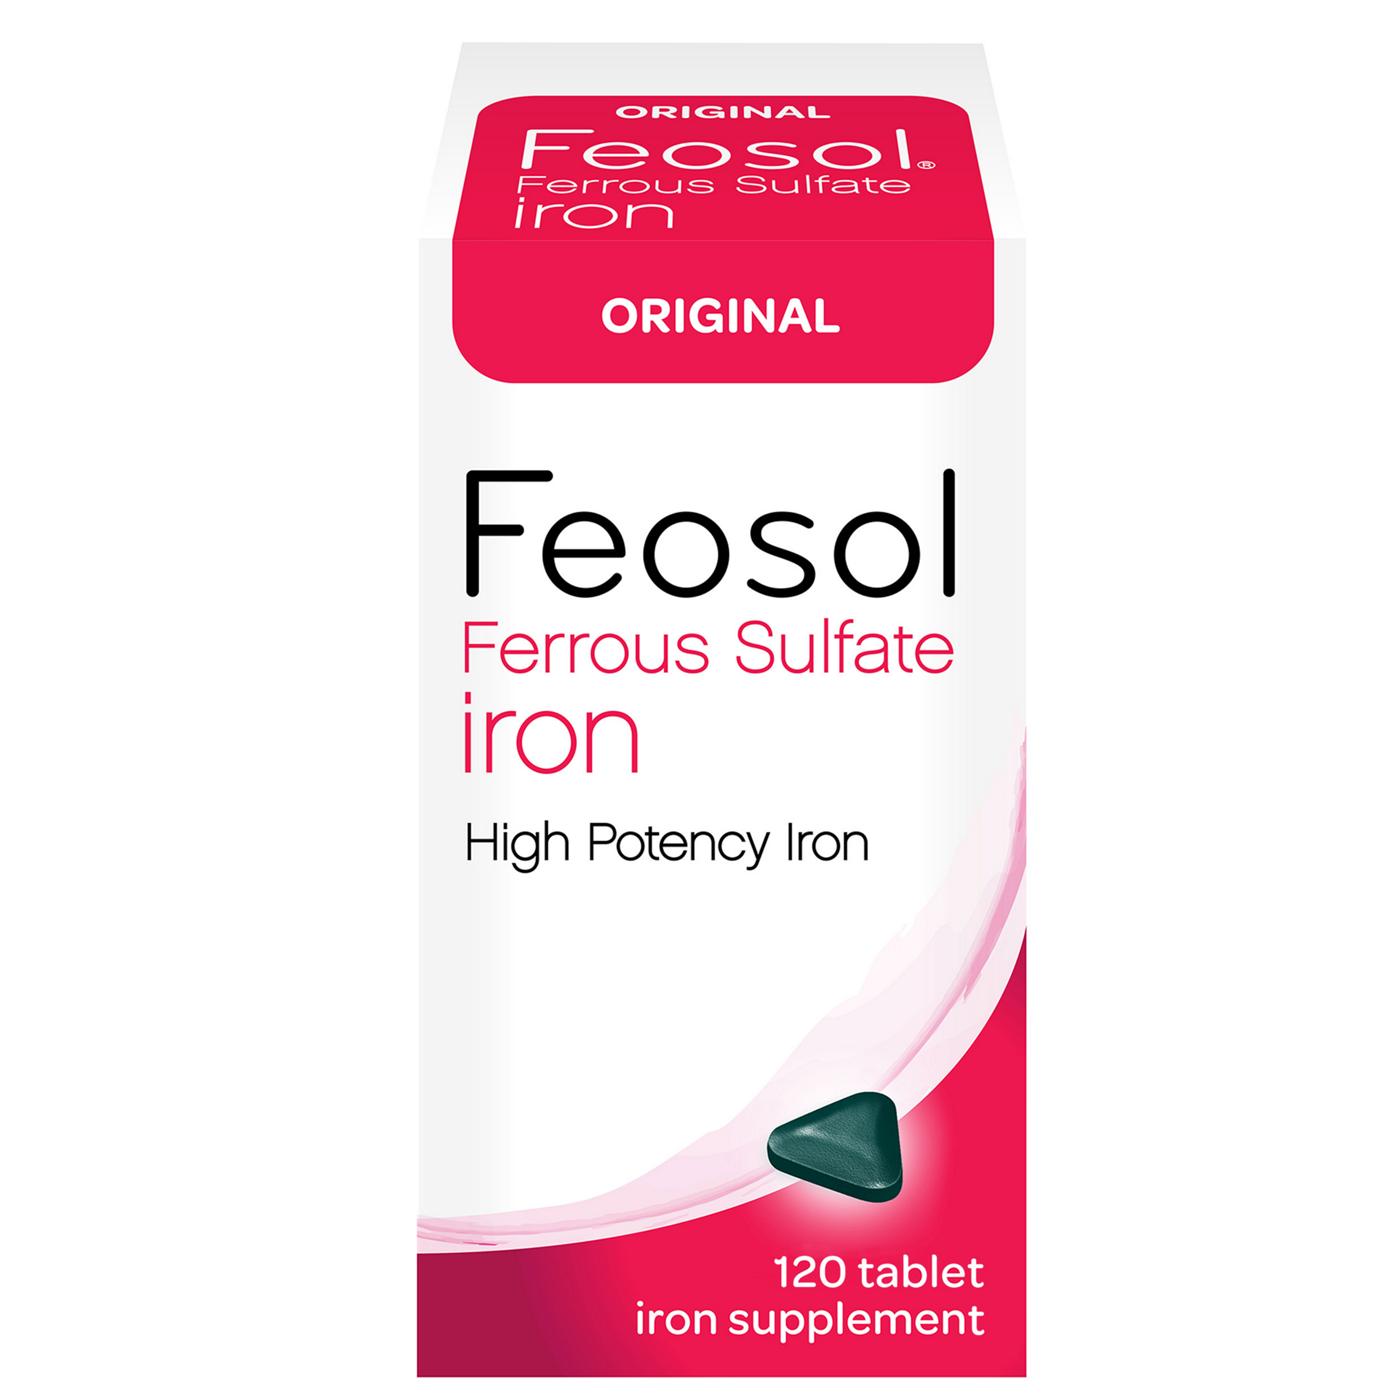 Feosol Original Ferrous Sulfate Iron Tablets; image 1 of 8